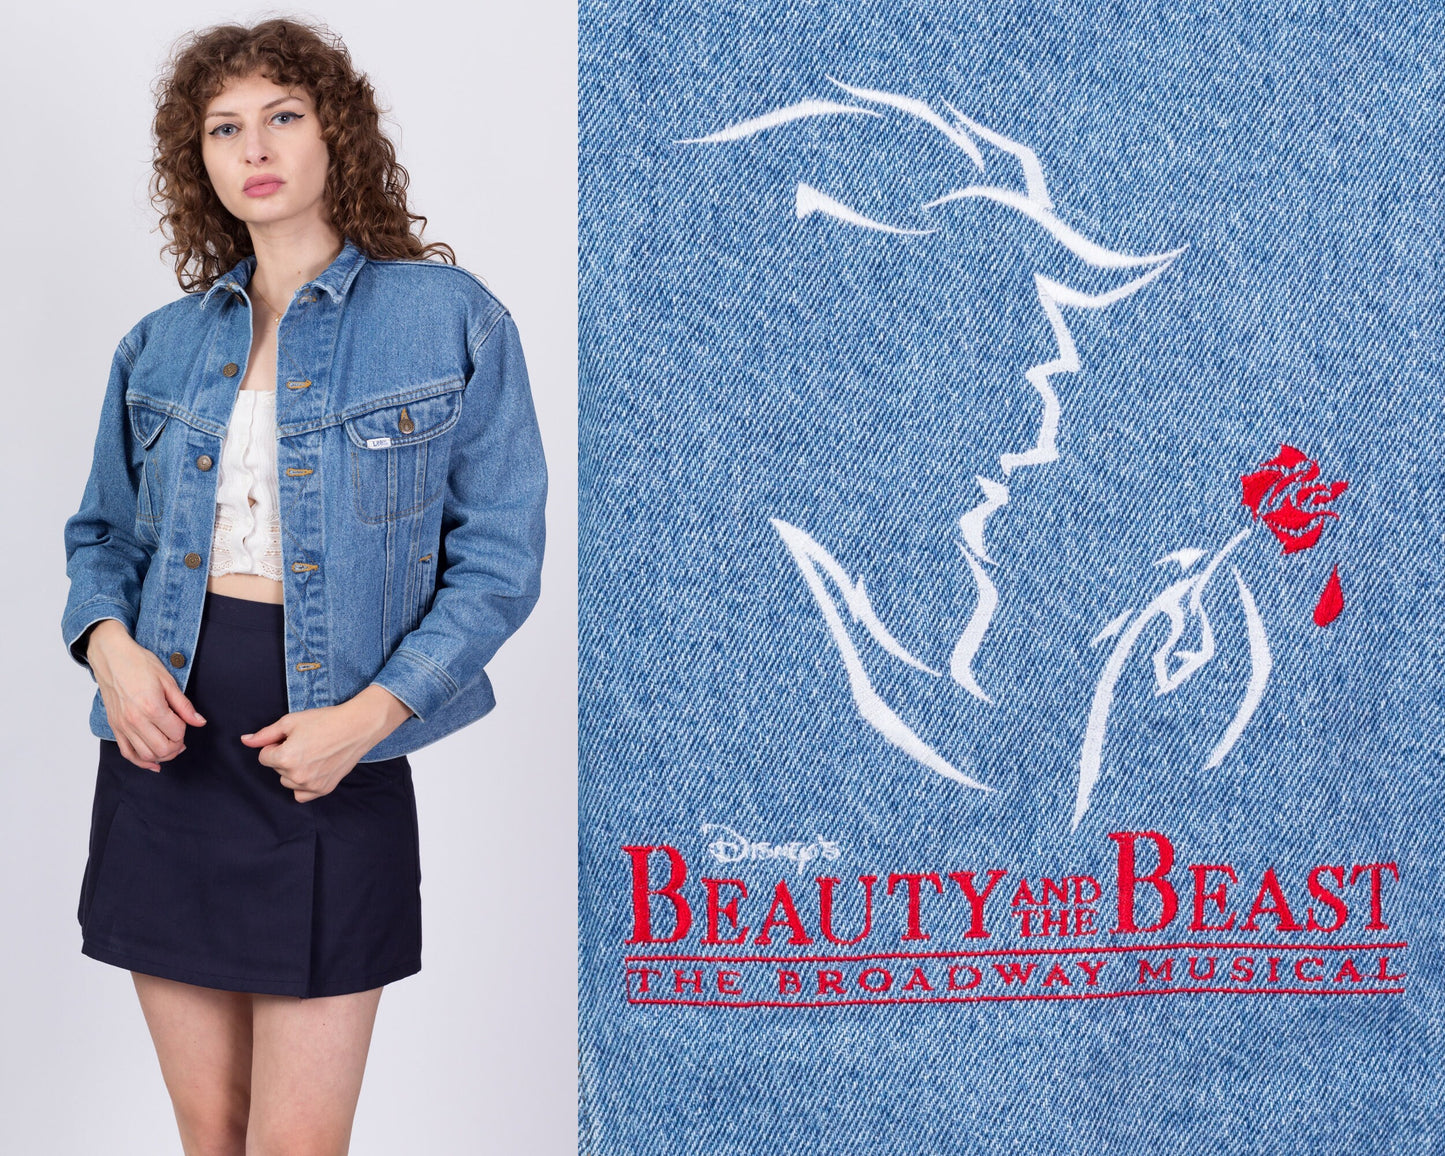 90s Beauty And The Beast Denim Jacket - Petite Large 